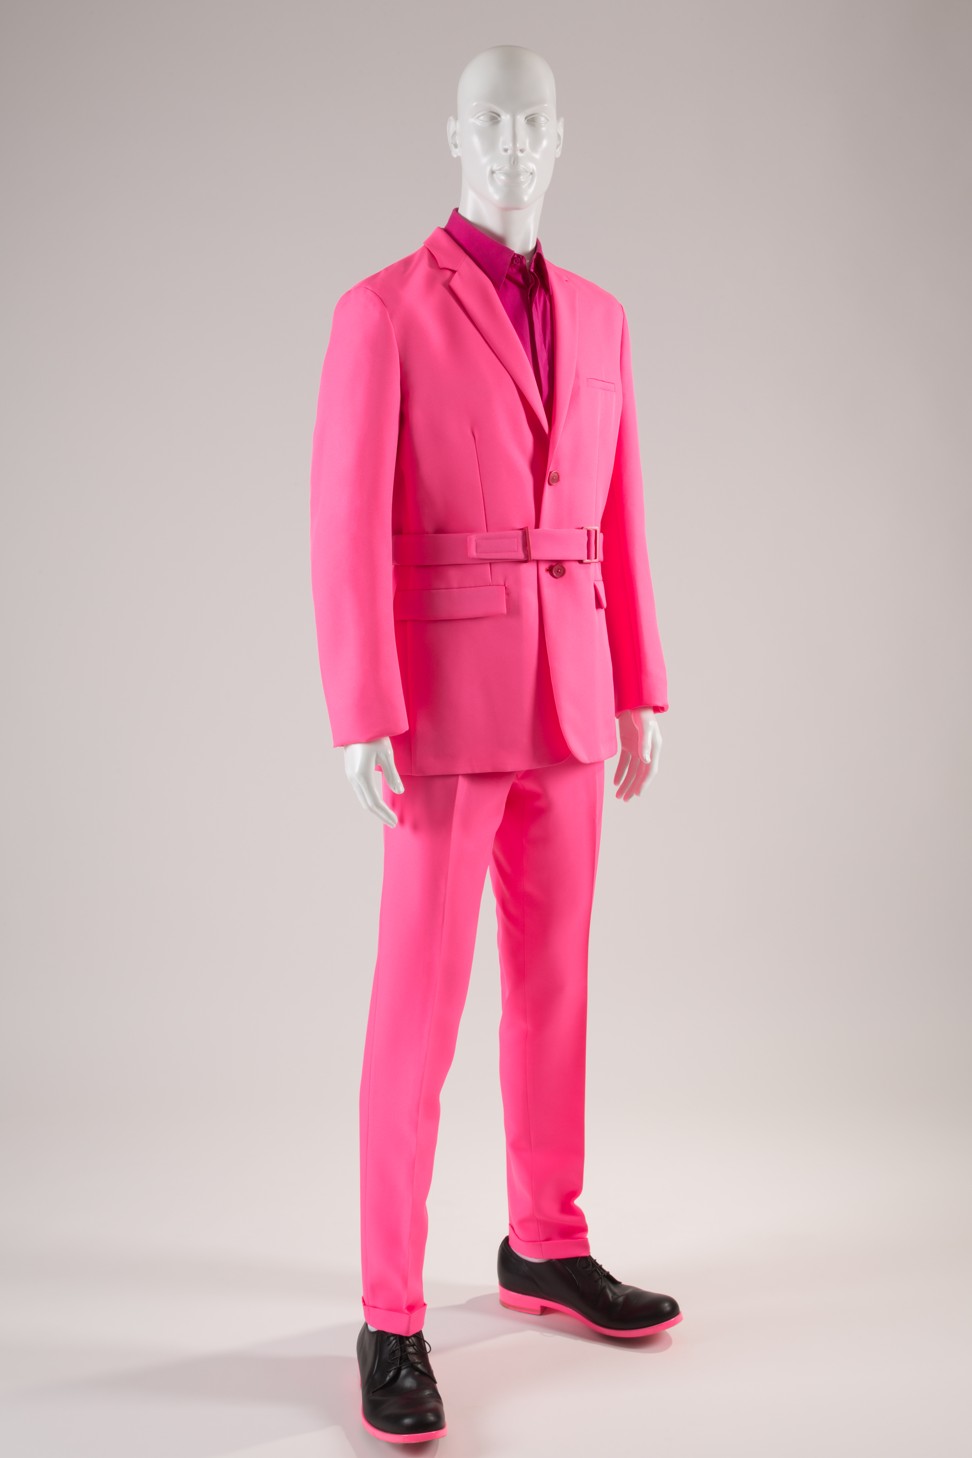 A pink men’s suit by Jil Sander (2011). Photo: Eileen Costa